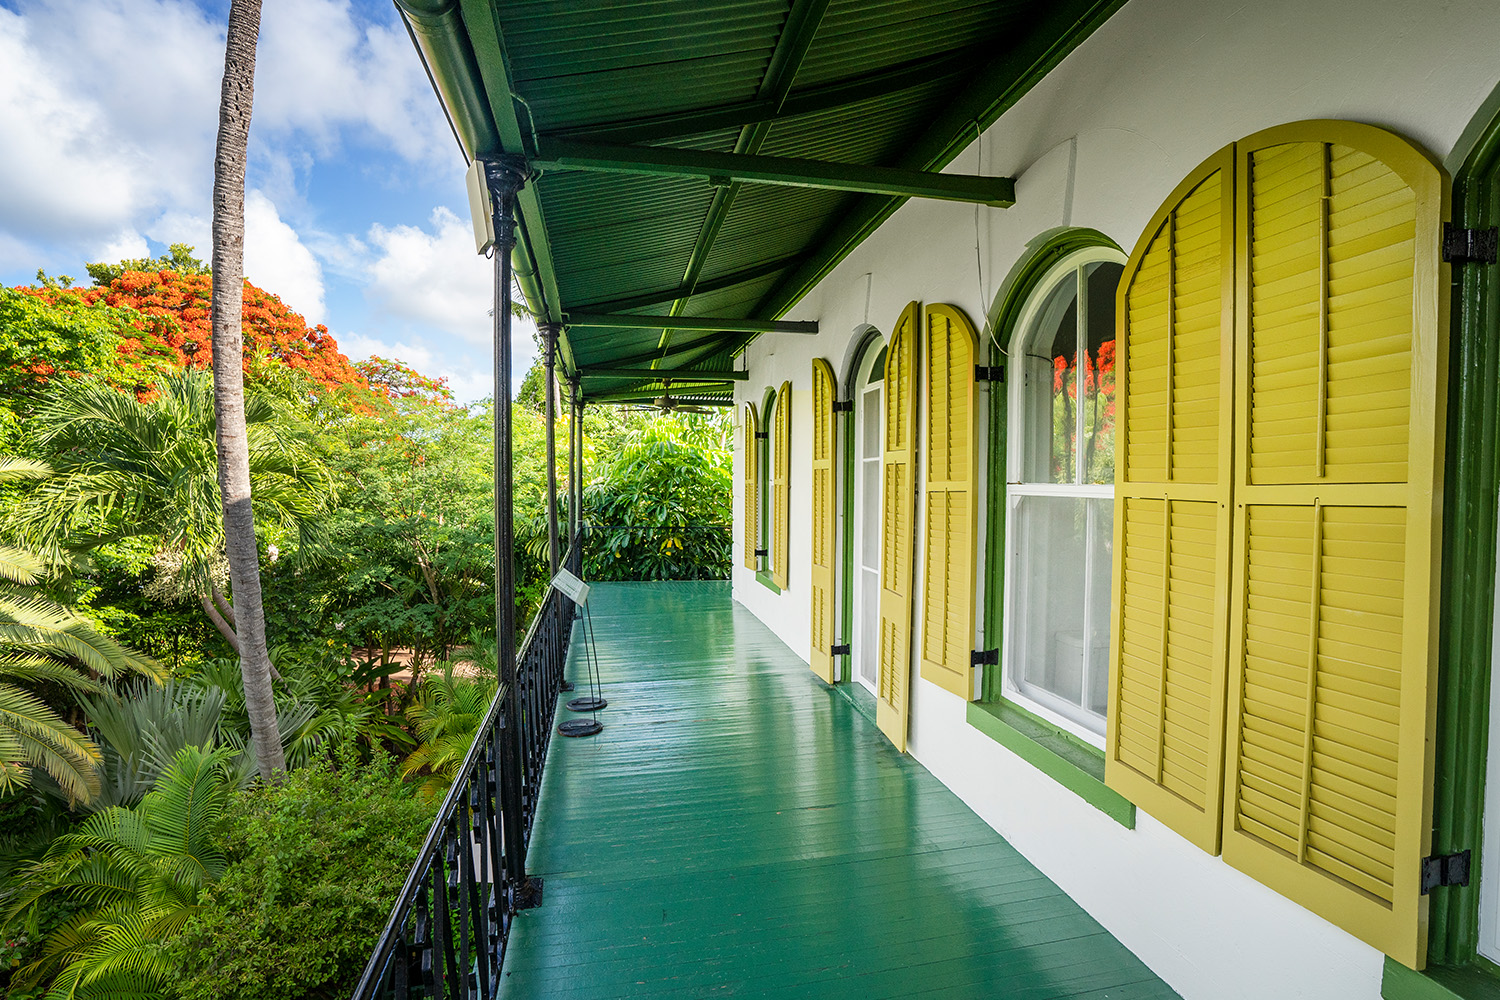 Hemingway's Key West house, from the veranda.